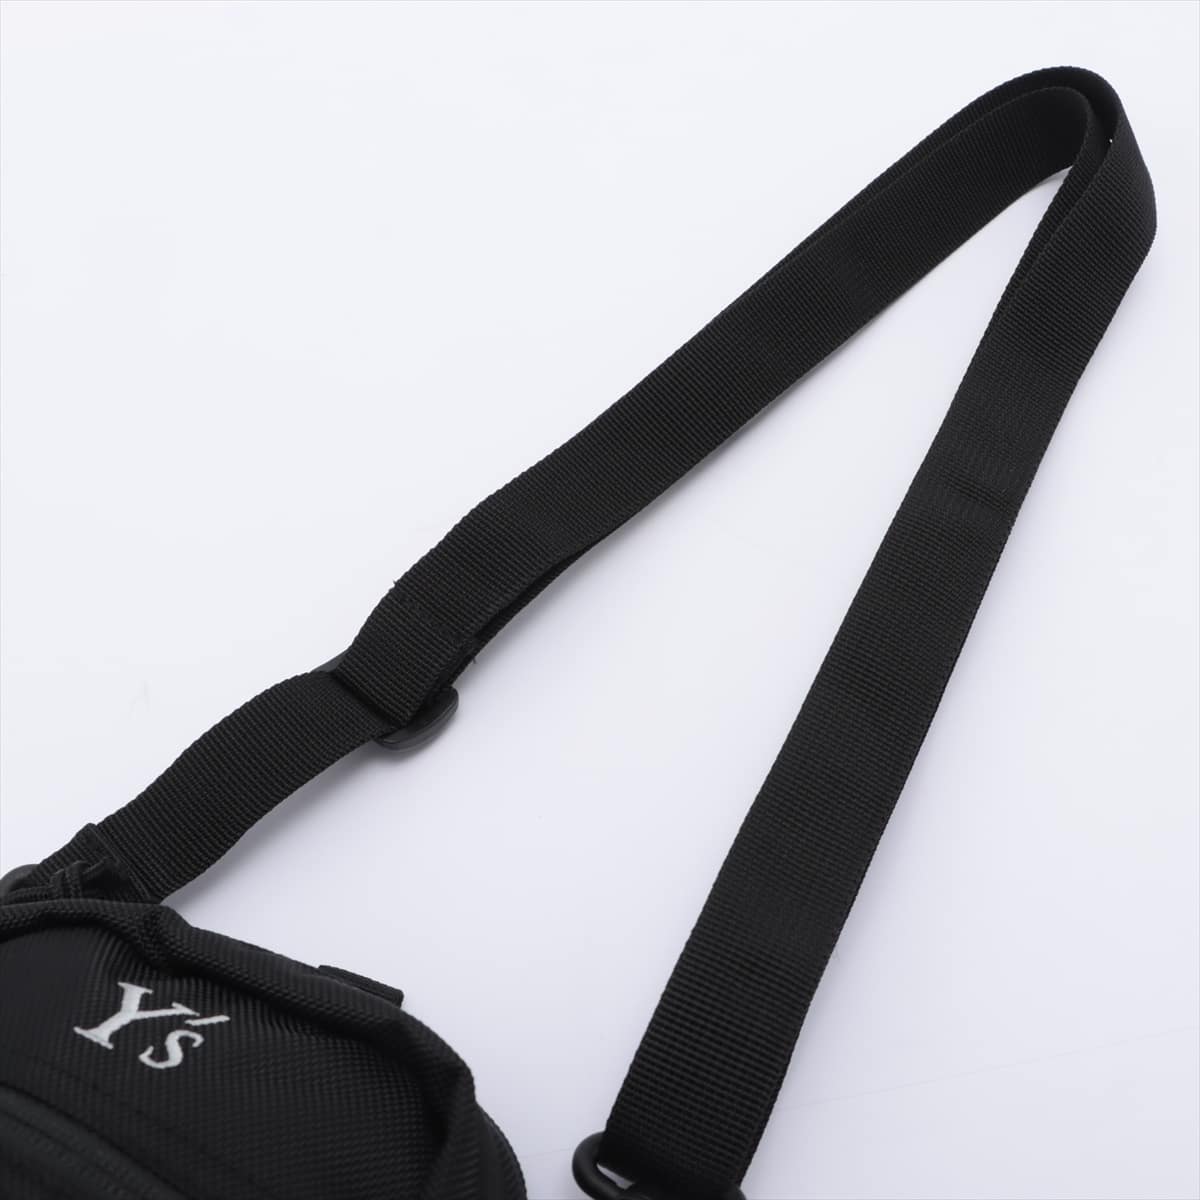 Y's Nylon Shoulder bag Black New Era